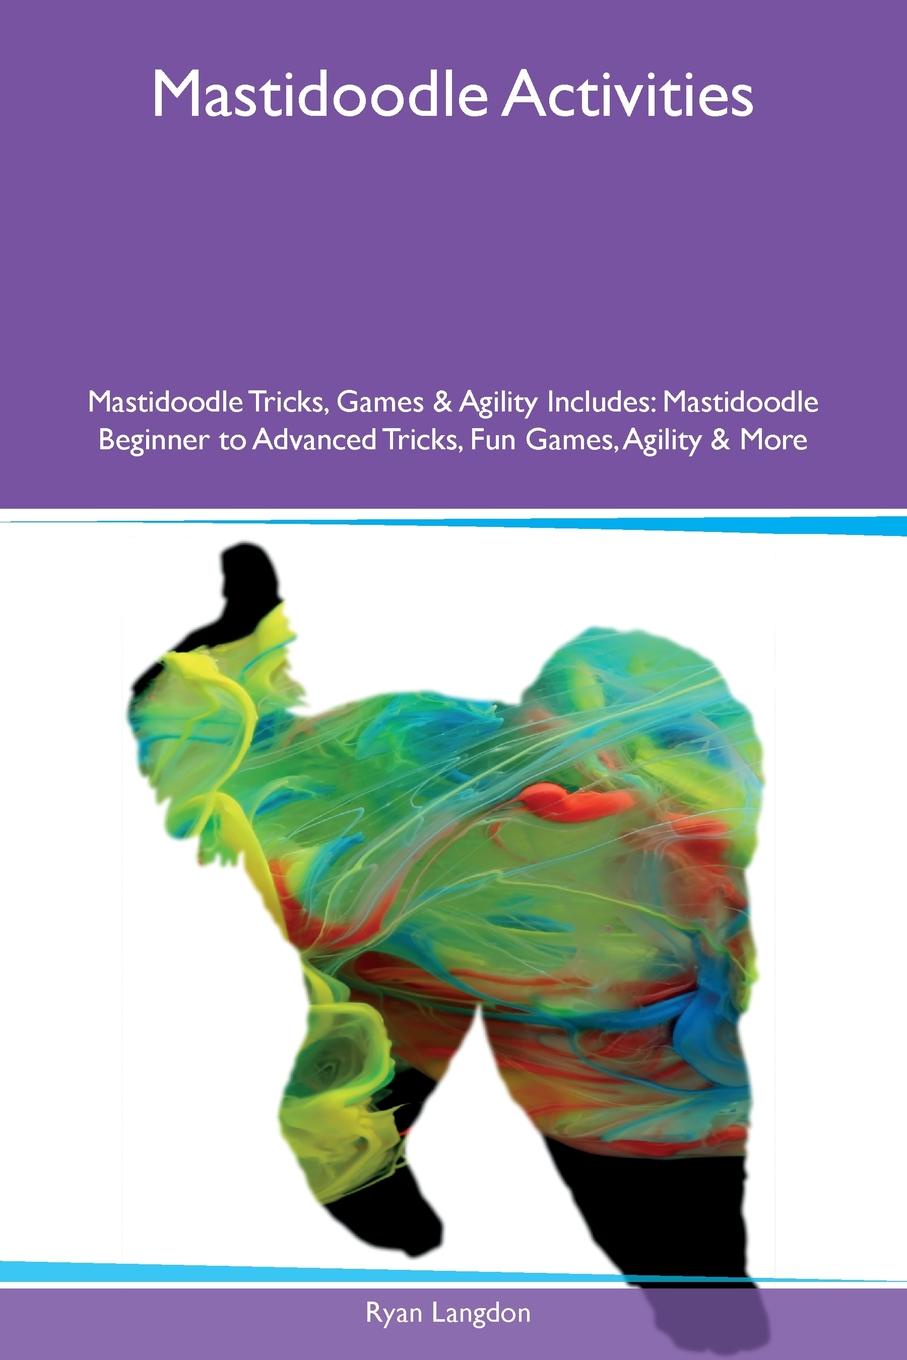 Mastidoodle Activities Mastidoodle Tricks, Games & Agility Includes. Mastidoodle Beginner to Advanced Tricks, Fun Games, Agility & More